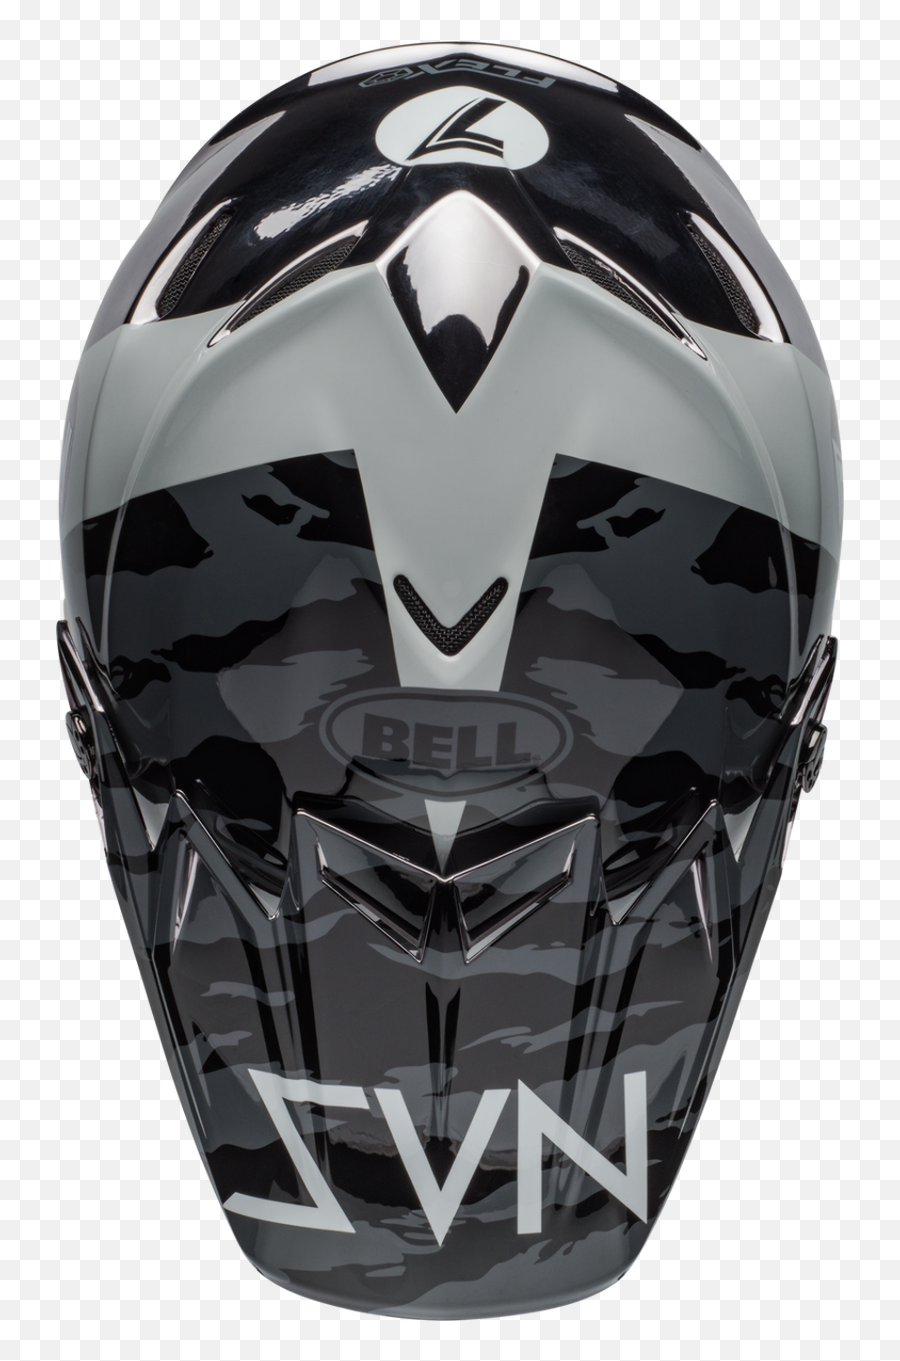 Bell Moto - Bell Moto Flex 9 Seven Zone Gloss Black White Chrome Png,Icon Helmets Sizing